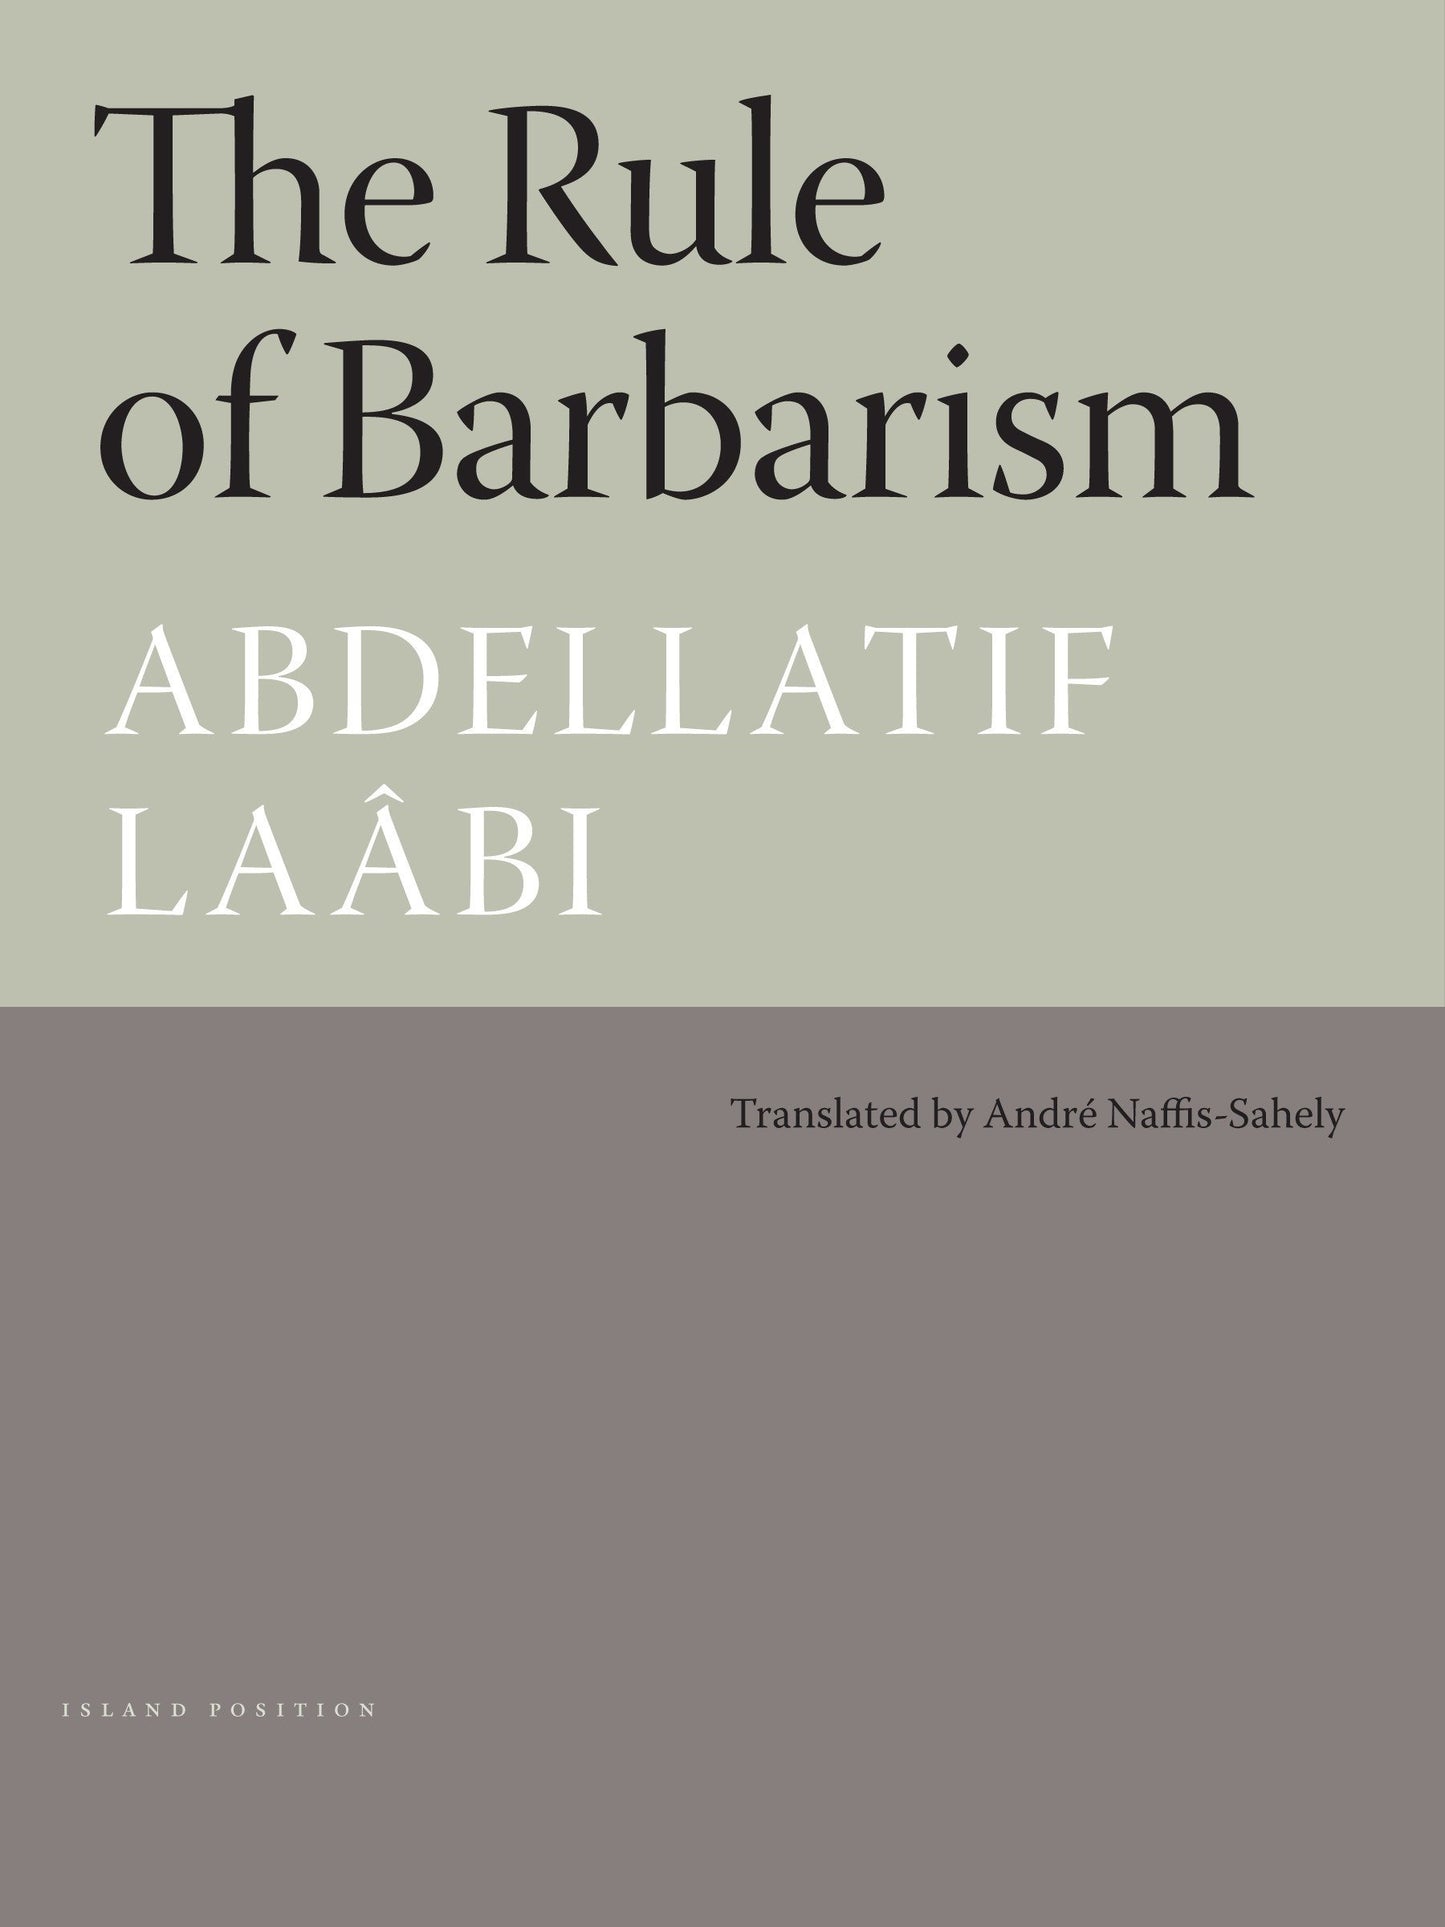 The Rule of Barbarism, by Abdellatif Laâbi